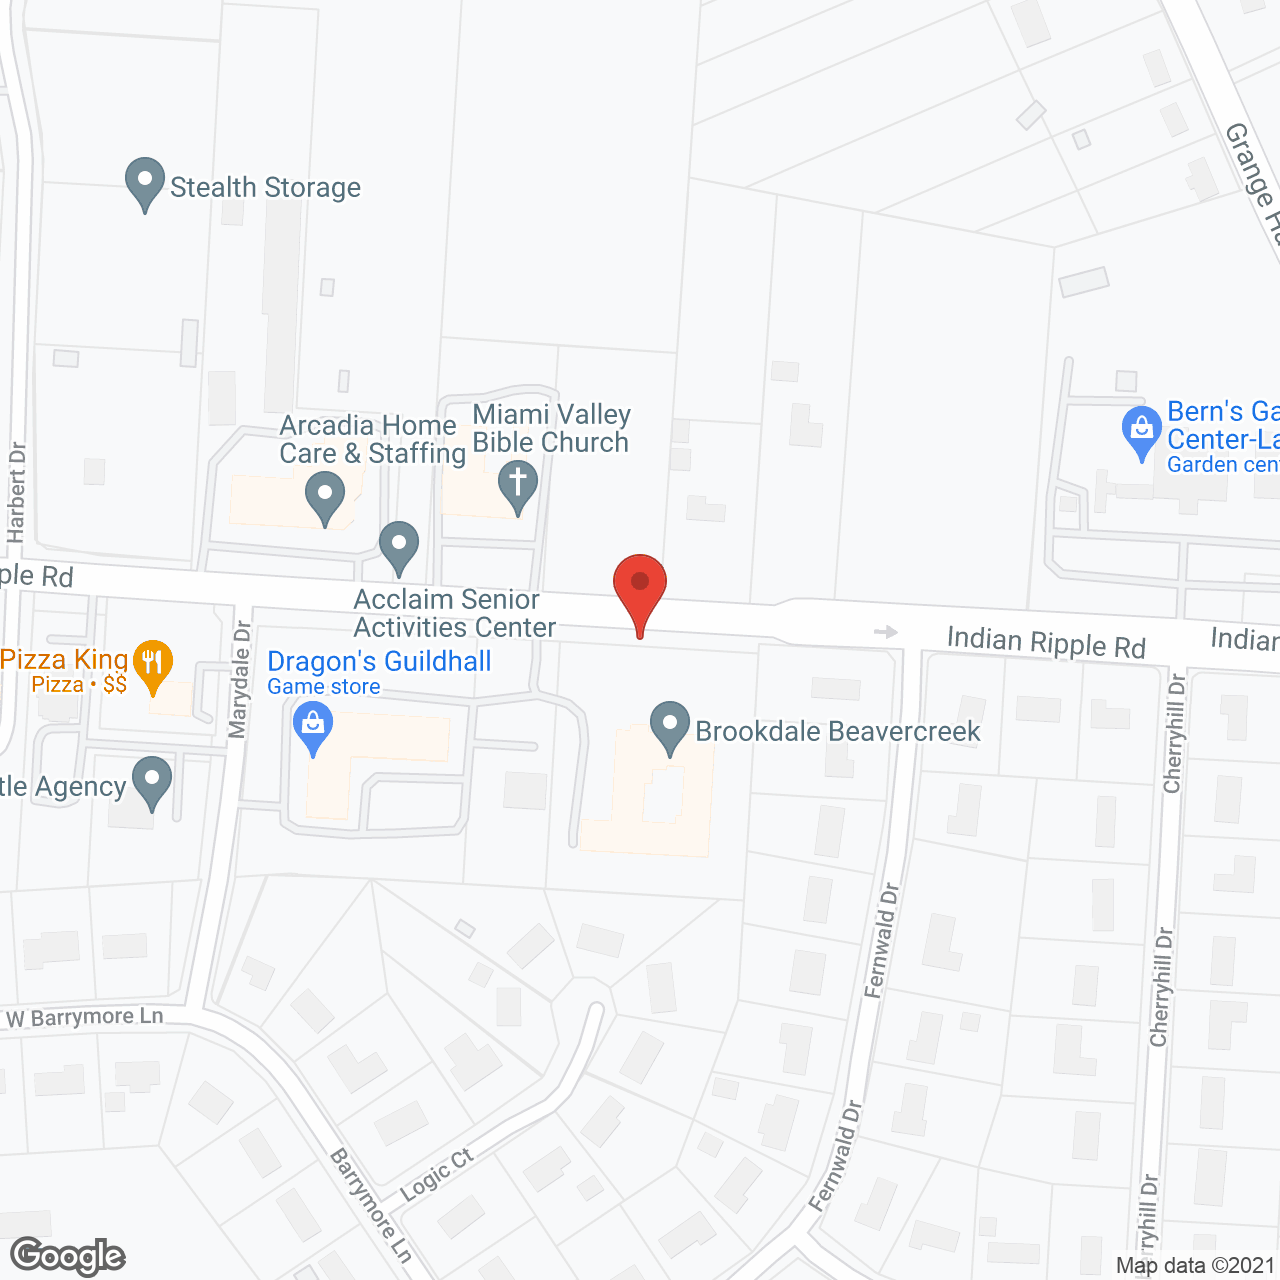 Brookdale Beavercreek in google map